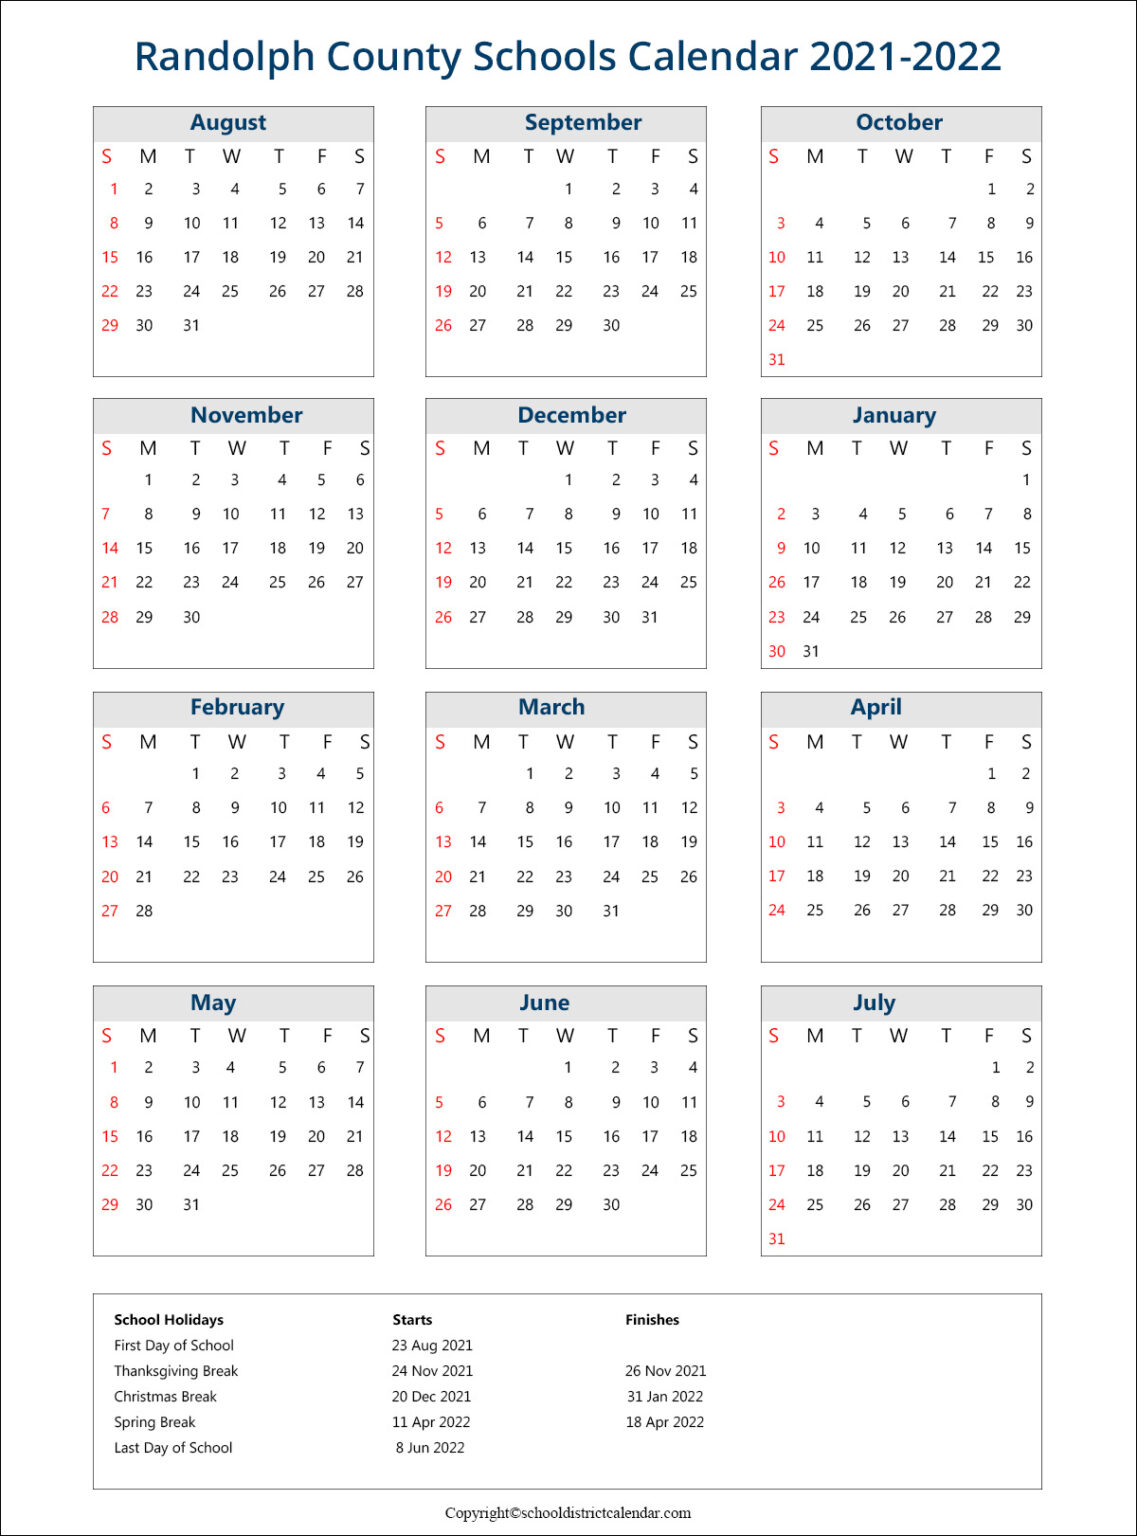 Randolph County Schools Calendar Holidays 20222023